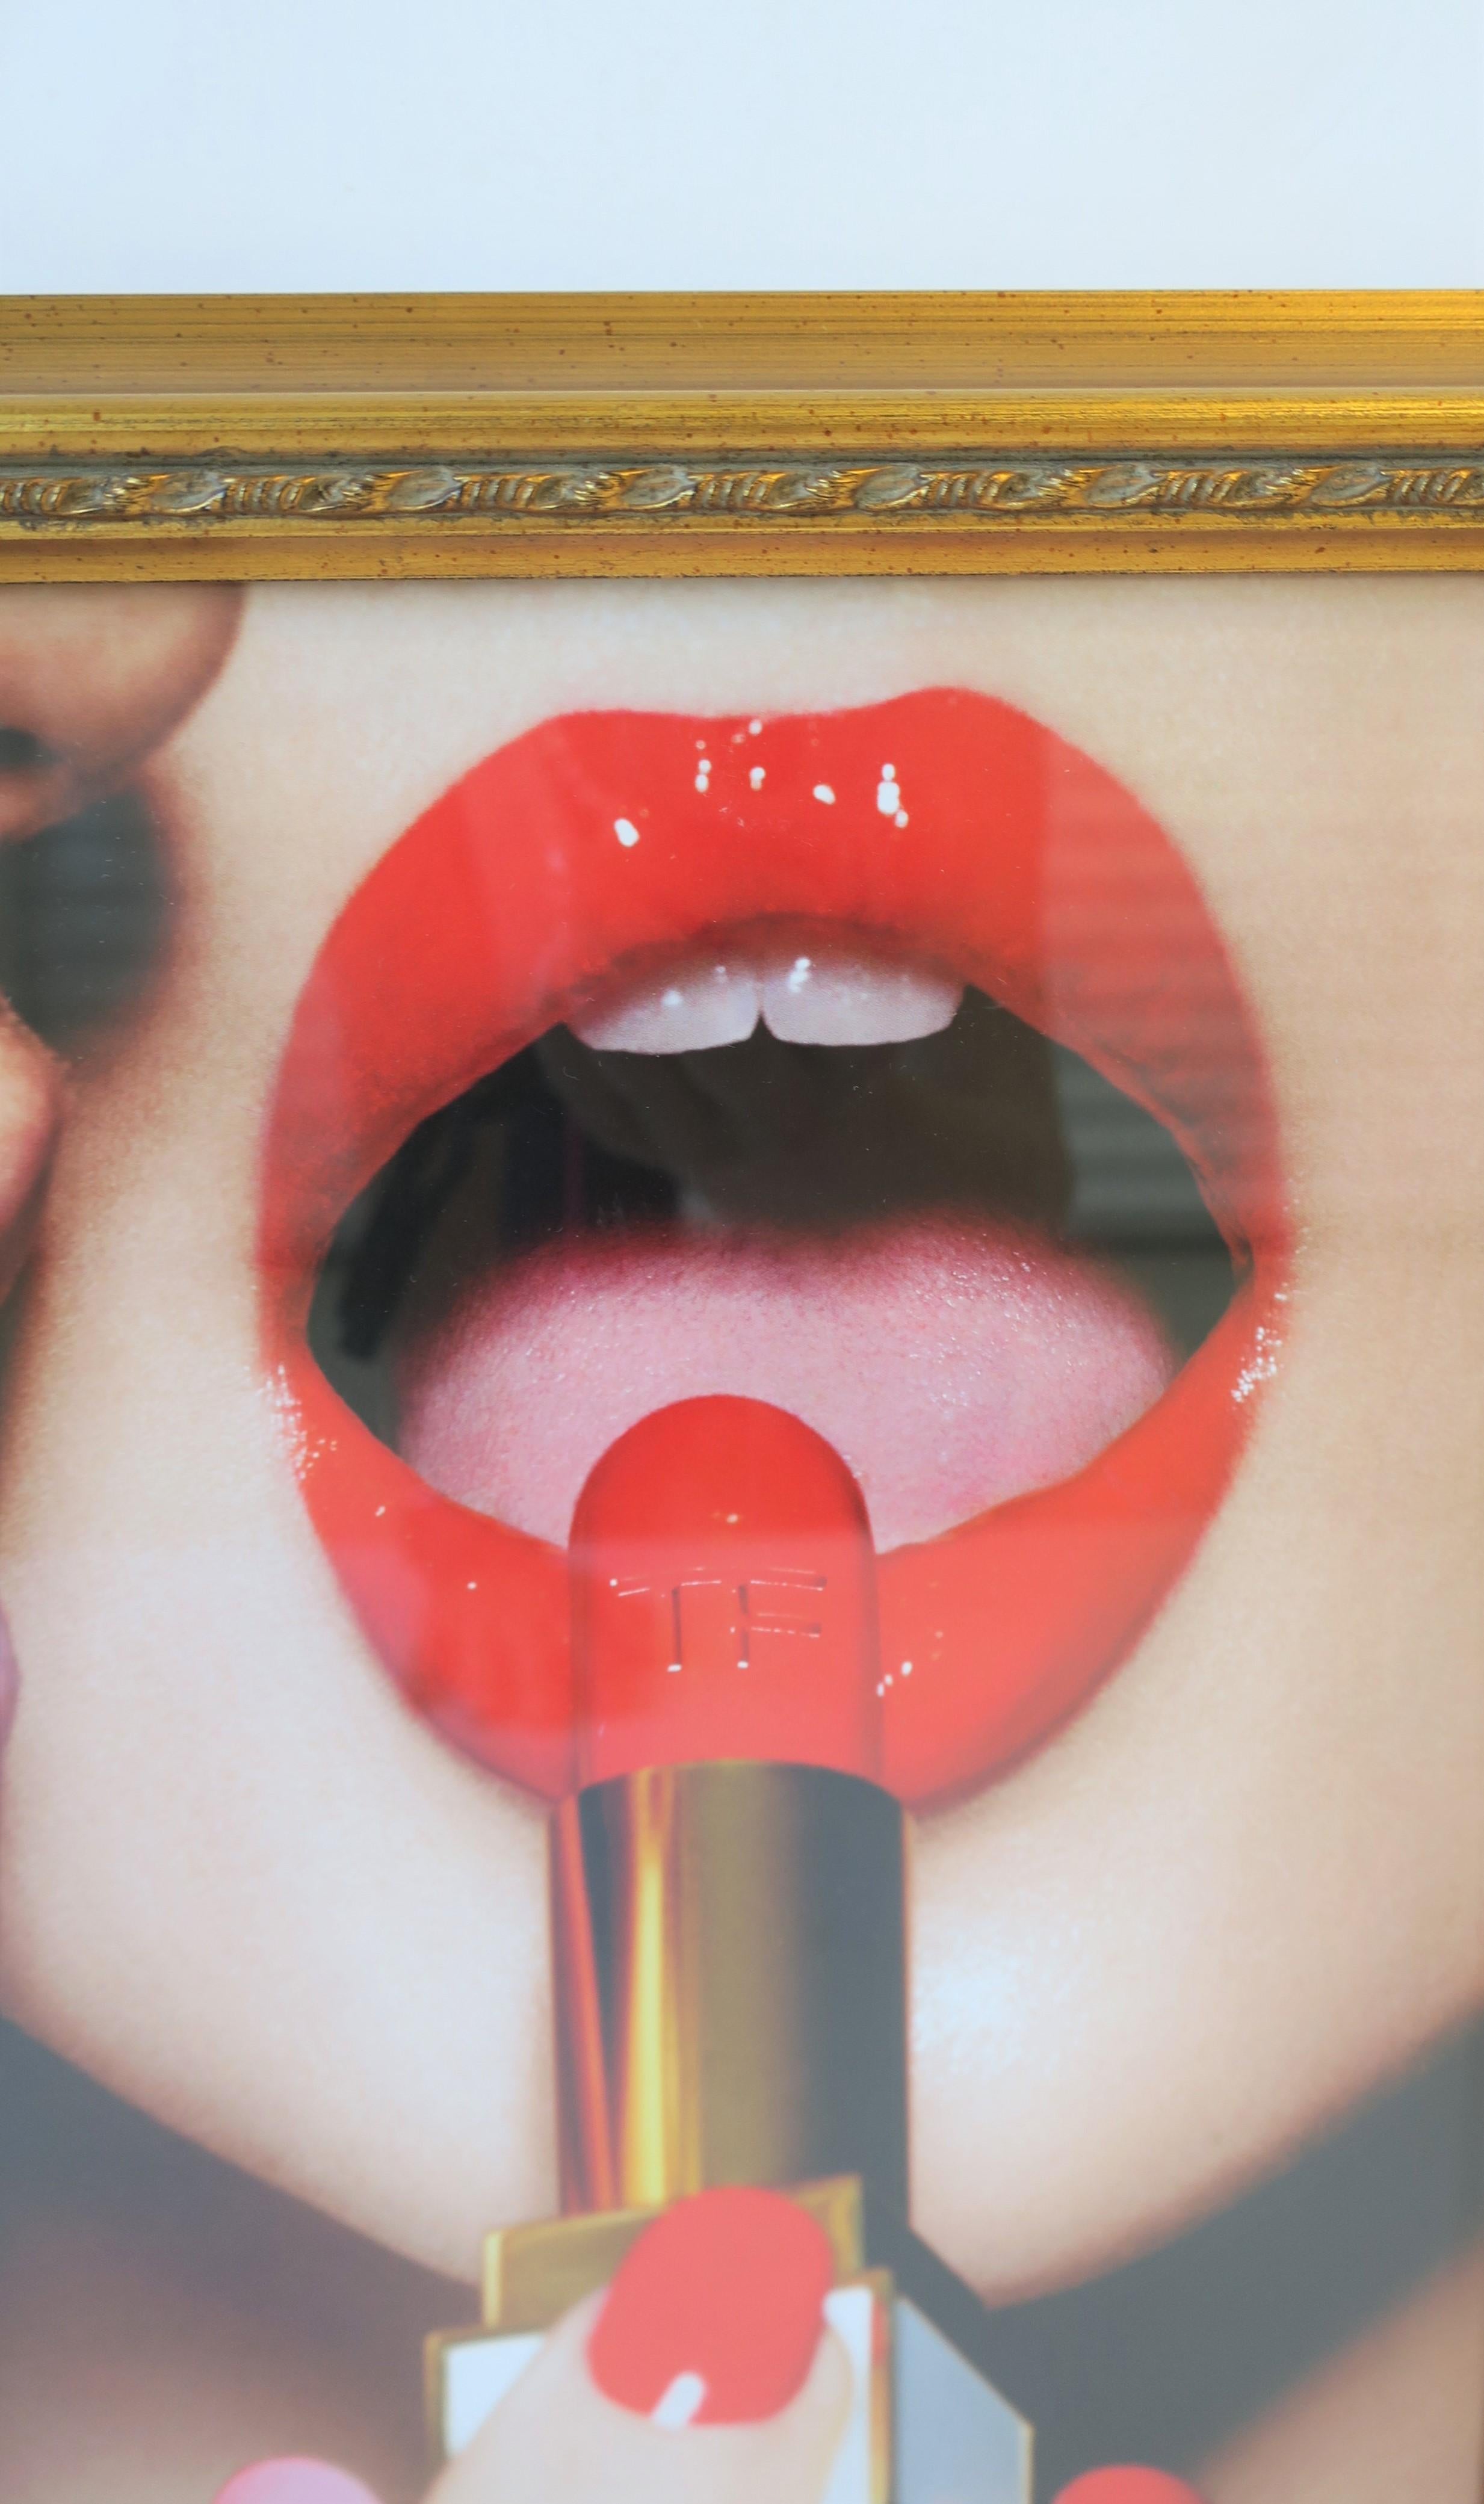 American Tom Ford Framed Makeup Print Advertisement Wall Art